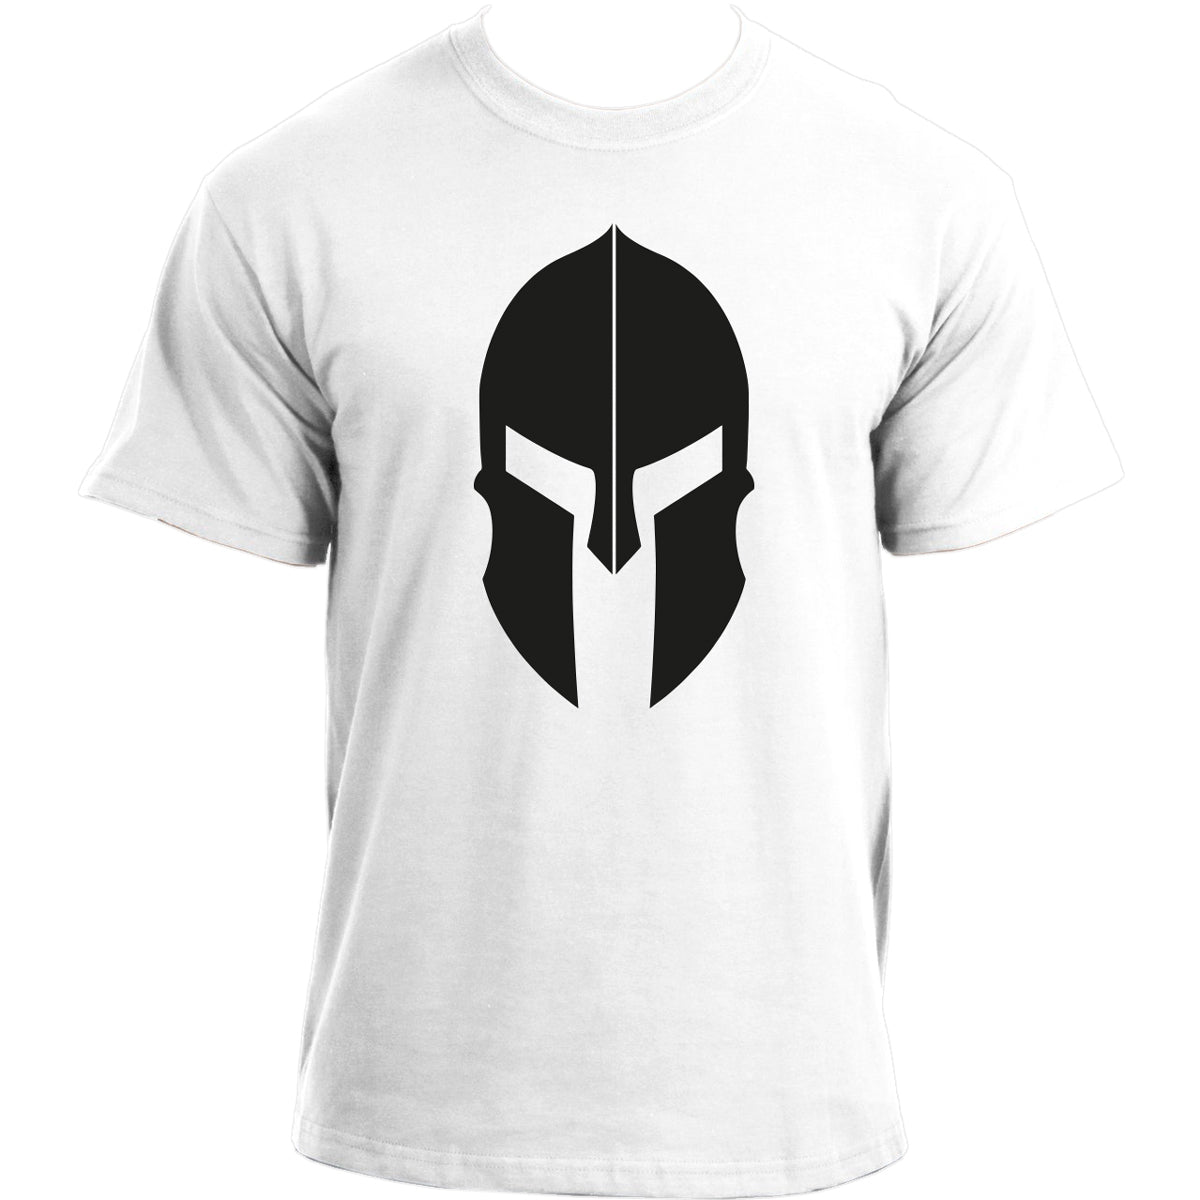 Spartan Helmet Sports T Shirt for Men - Training Top, Mens Tshirt For The Gym